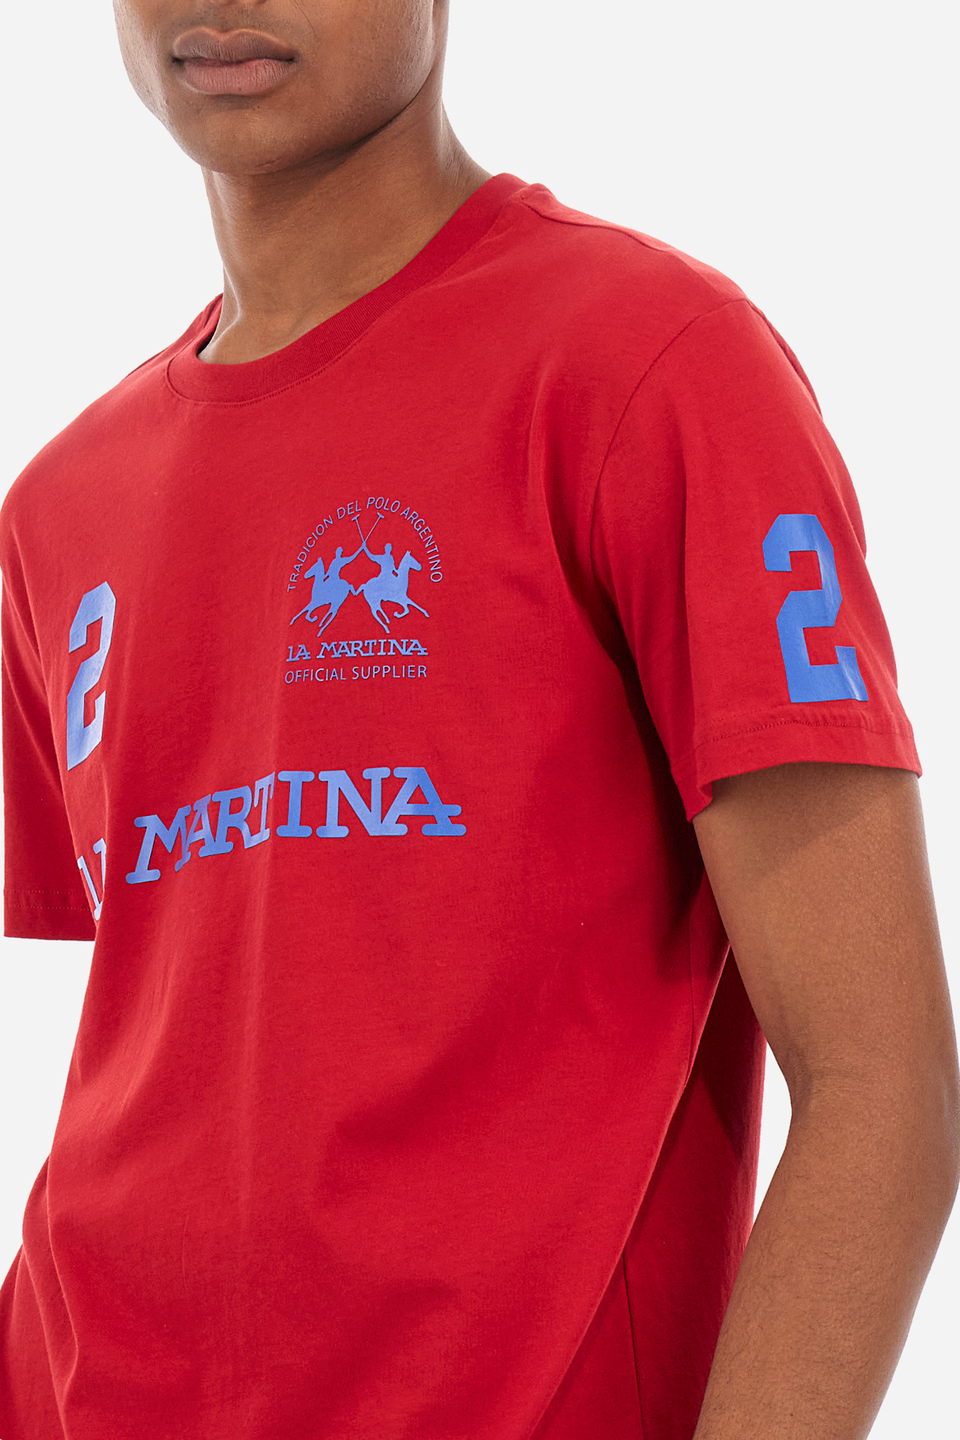 Herren -T -Shirt regular fit - Reichard | La Martina - Official Online Shop